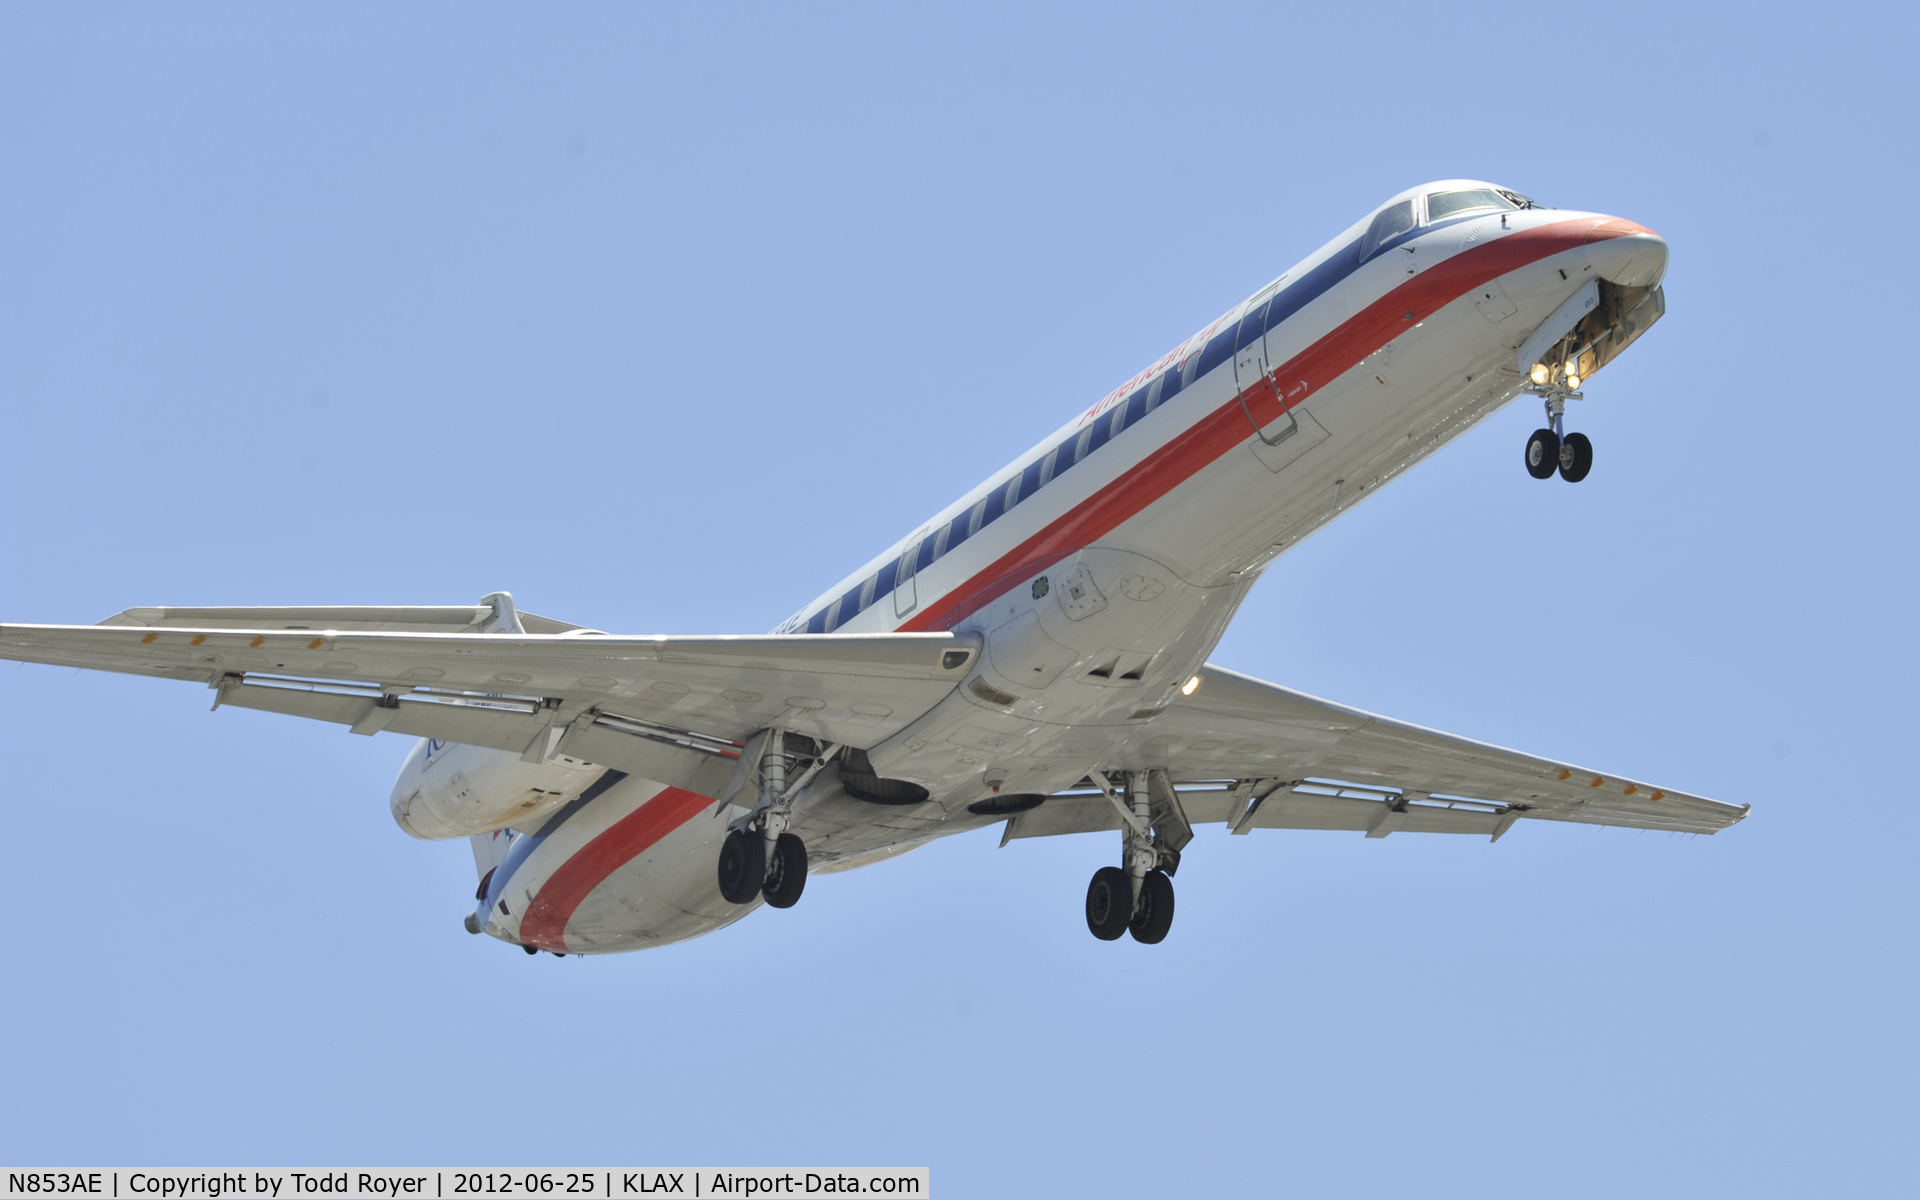 N853AE, 2003 Embraer ERJ-140LR (EMB-135KL) C/N 145742, Arriving at LAX on 24R